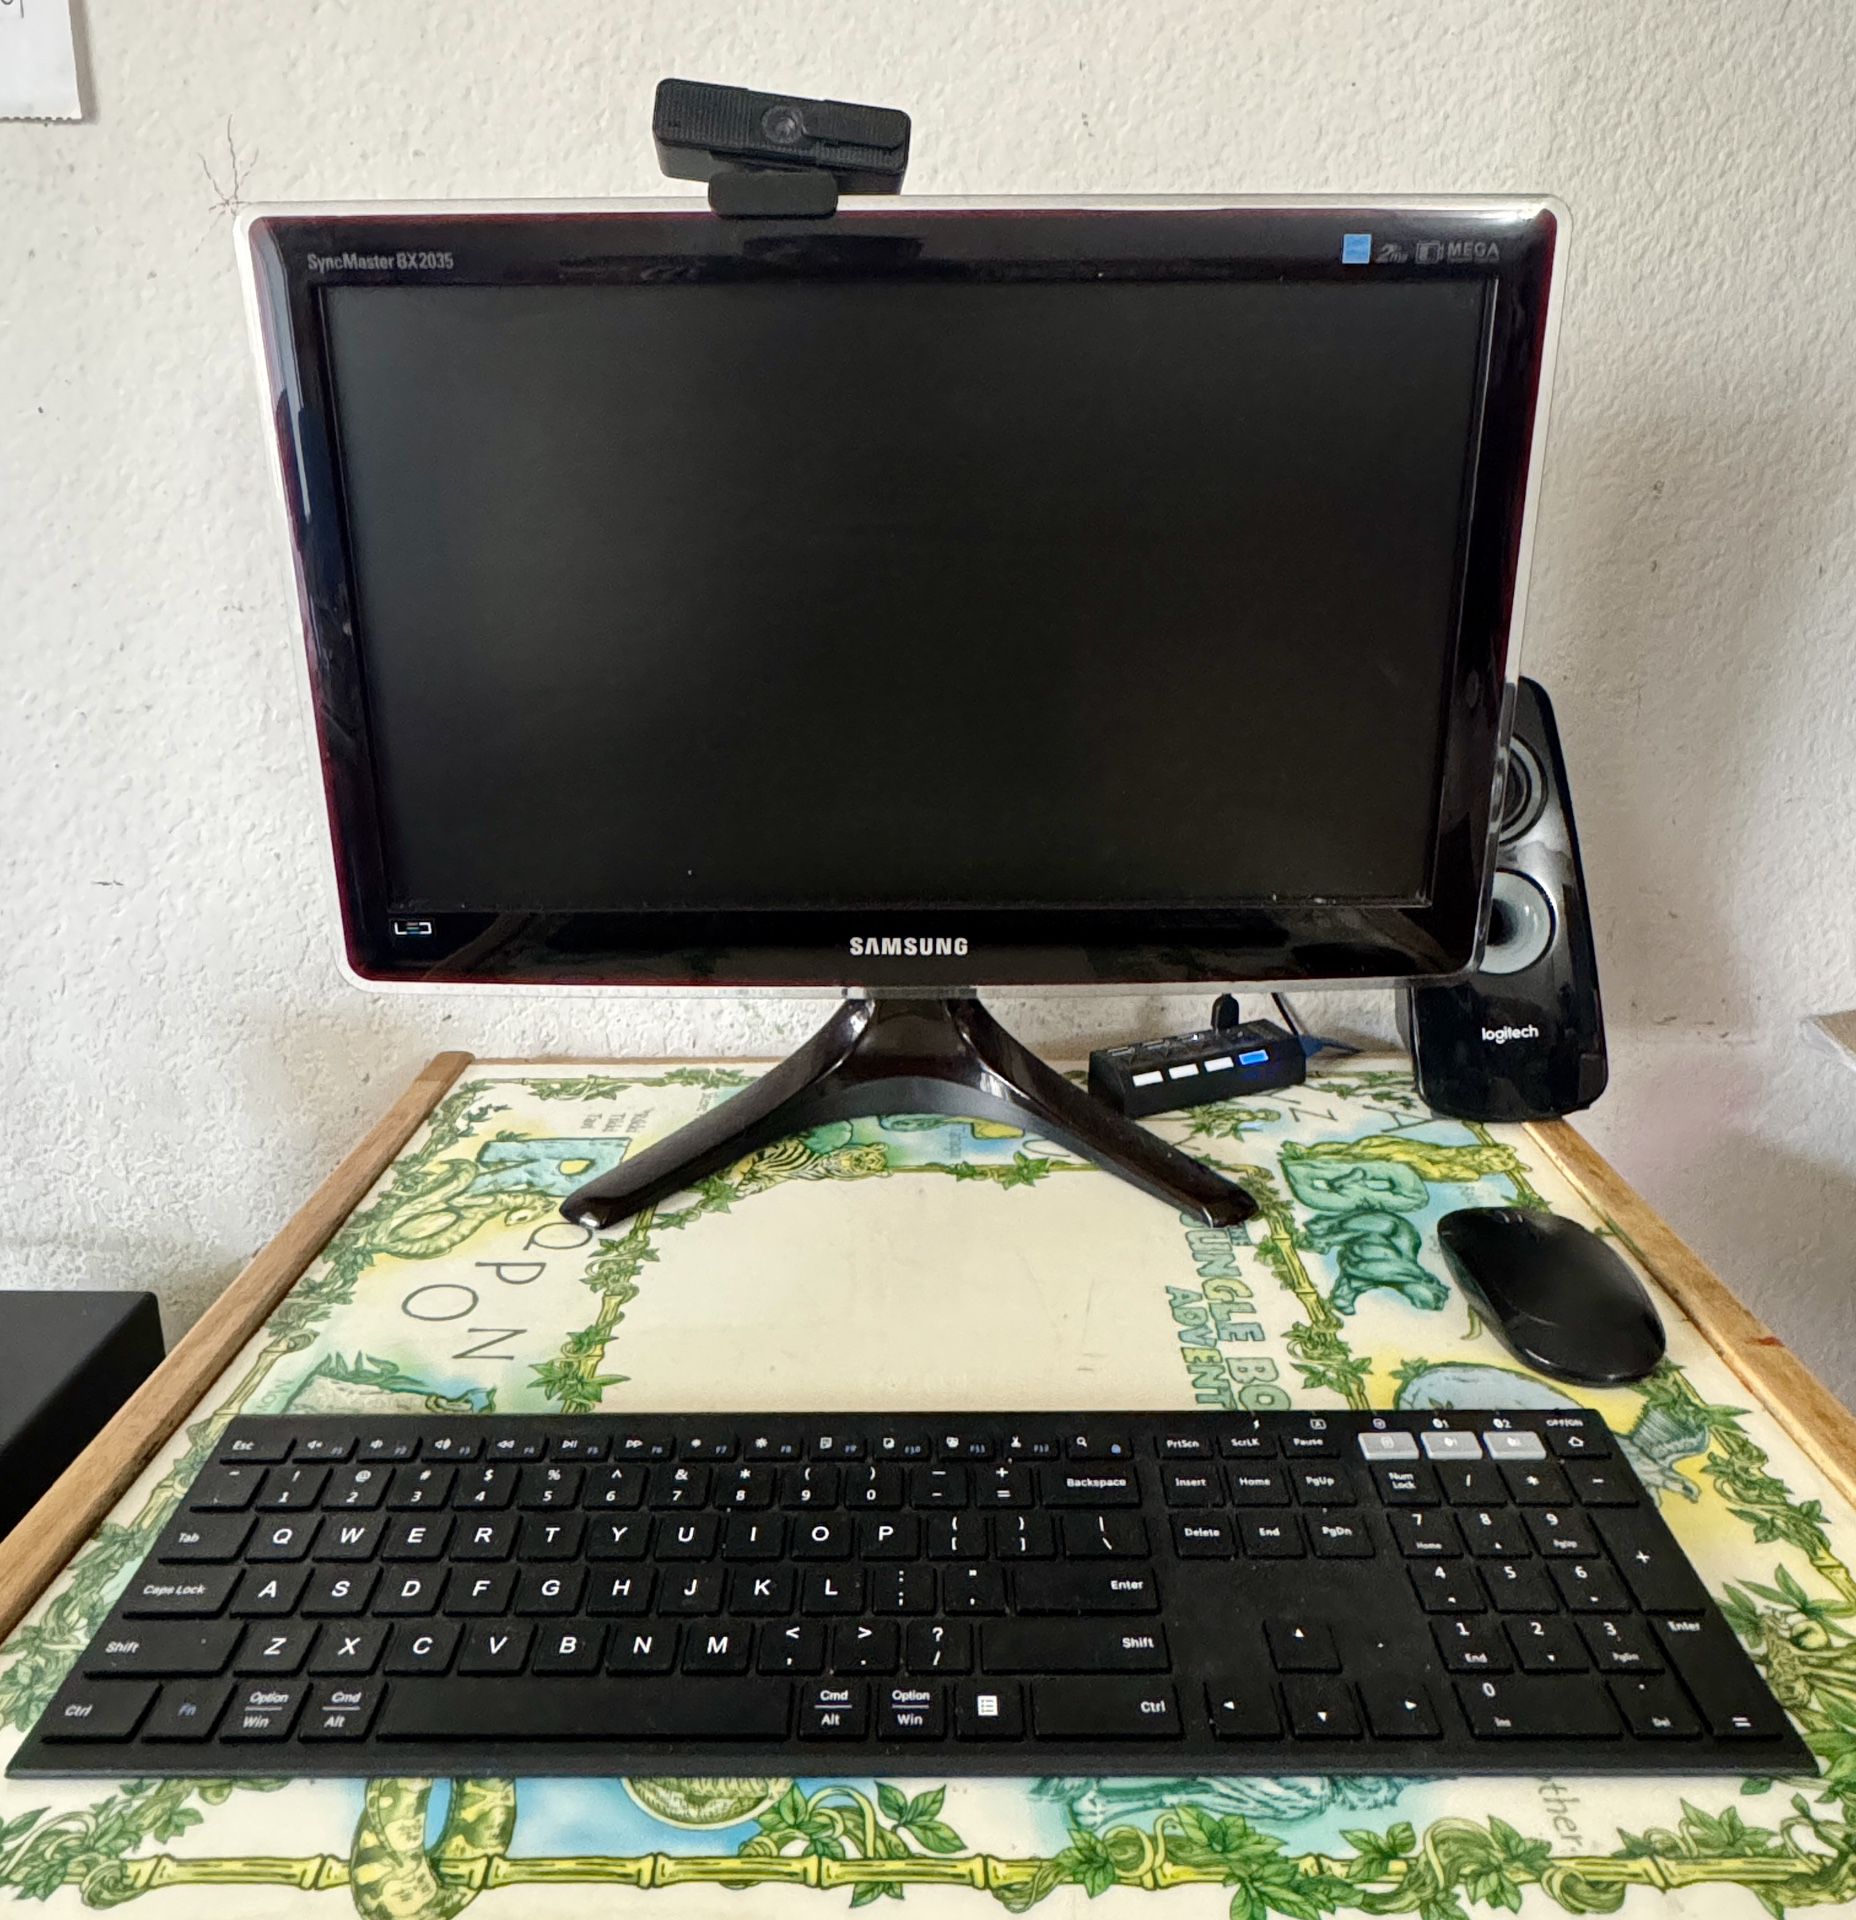 Personal Desk Computer - Intel I5, 8GB RAM, 1TB Hard drive, Windows 10 with Samsung LED monitor etc